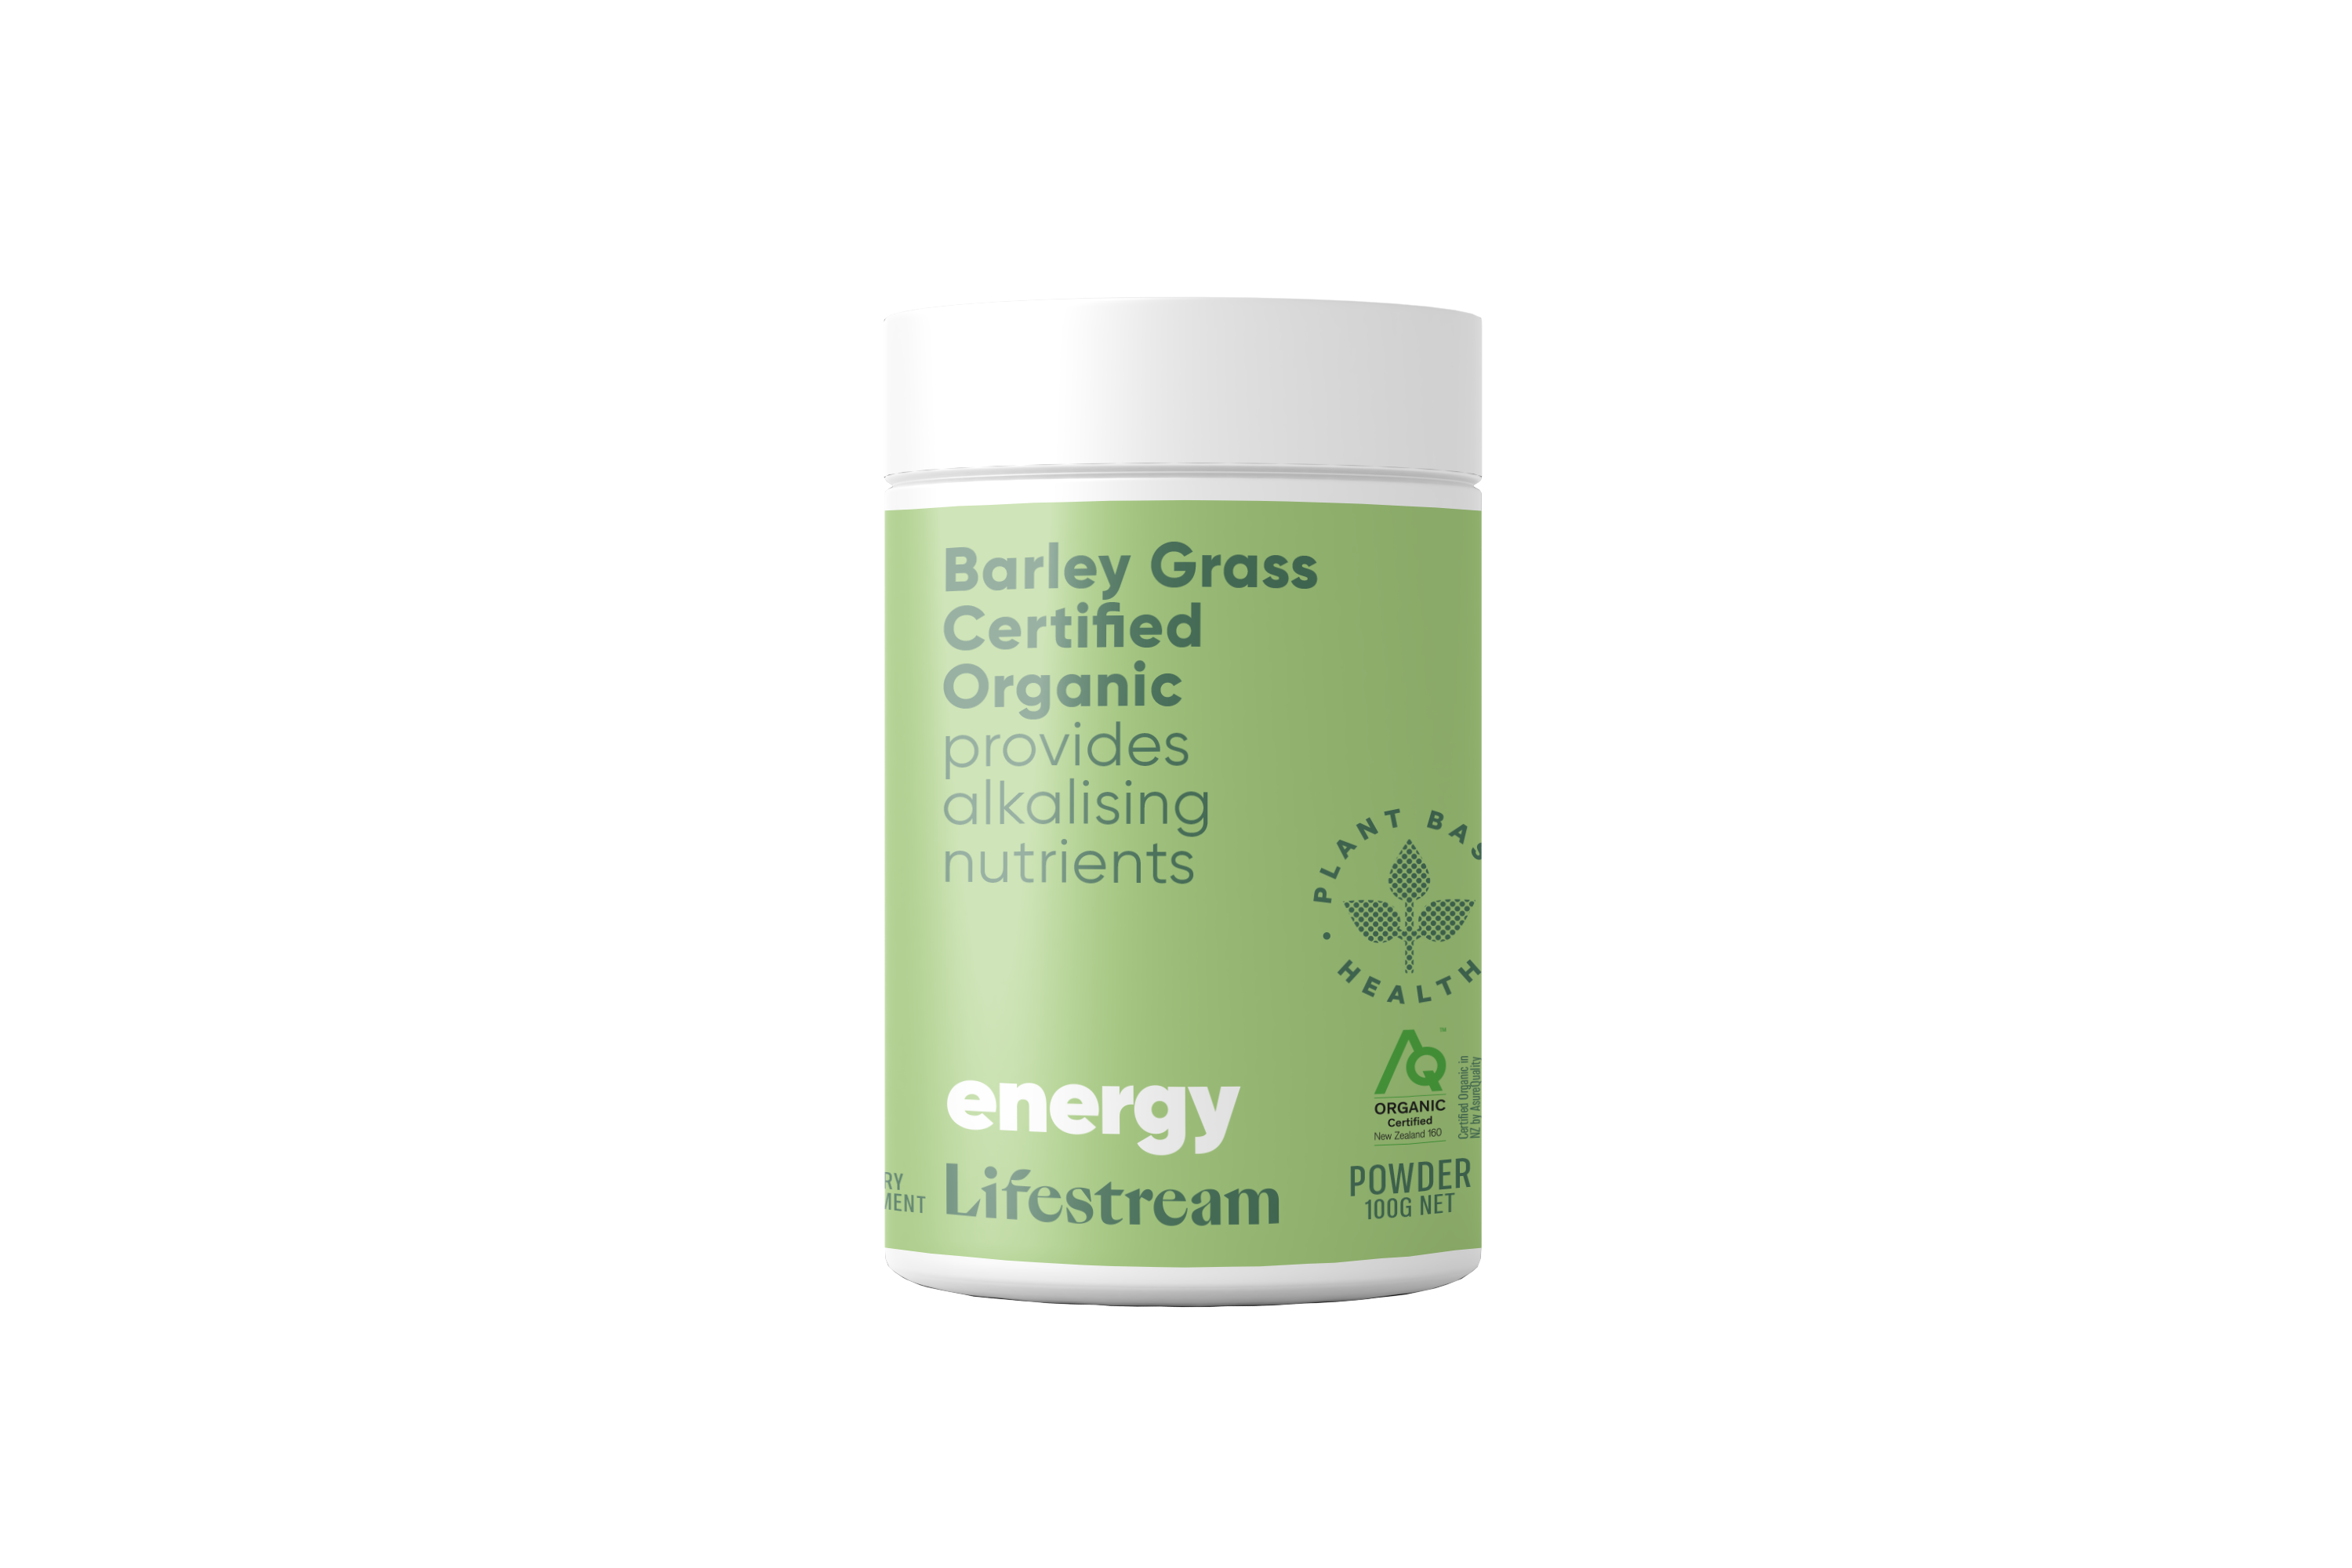 Lifestream Barley Grass 100g Powder